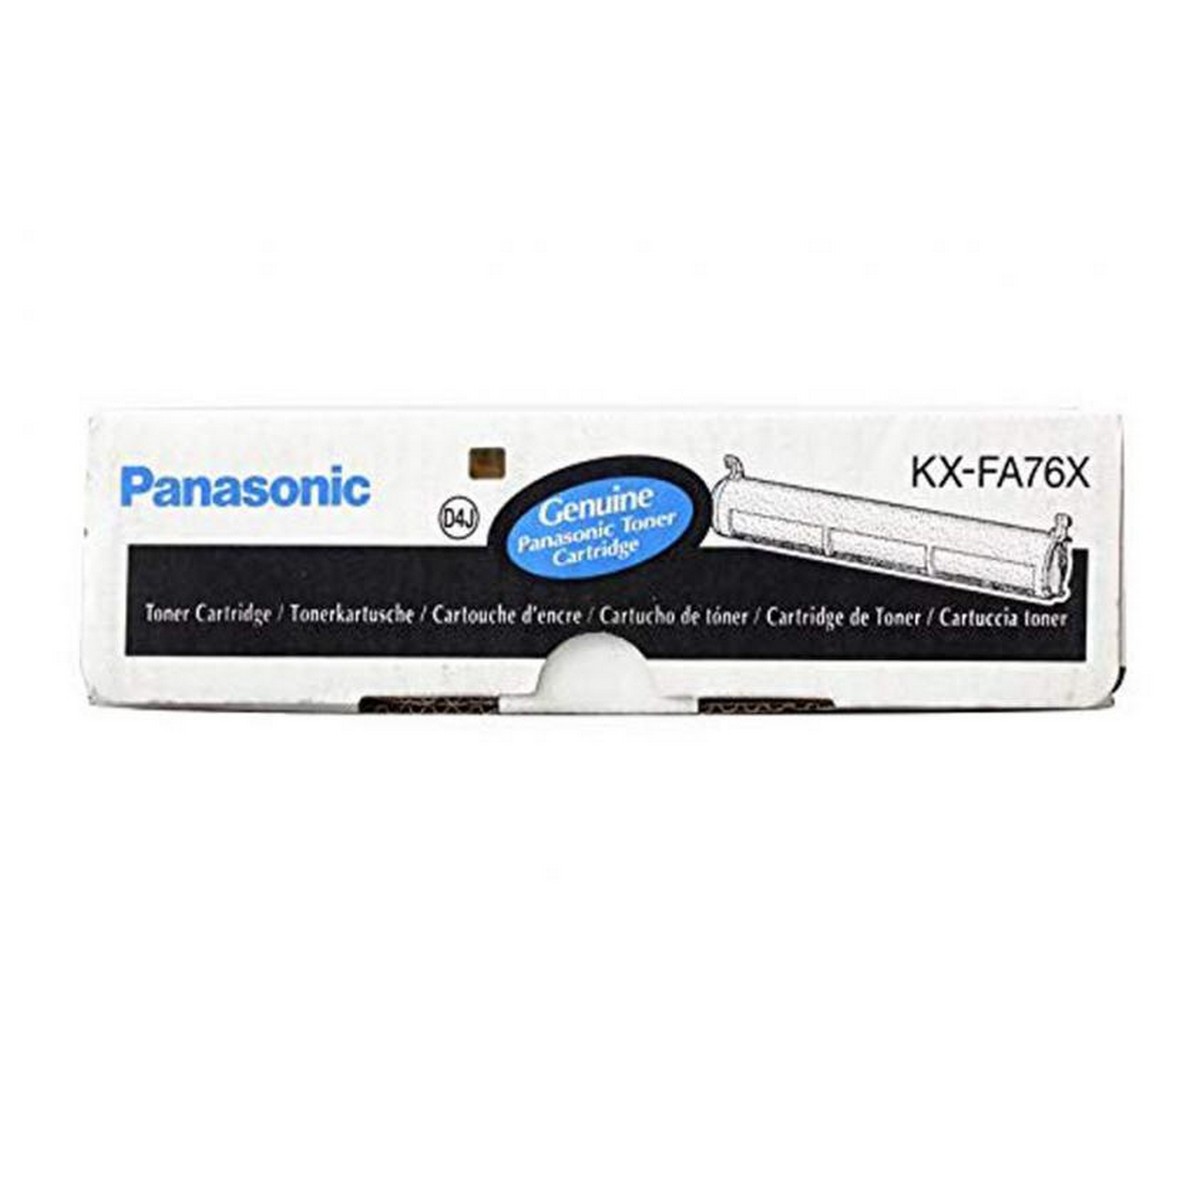 PANASONIC KX-FA76X